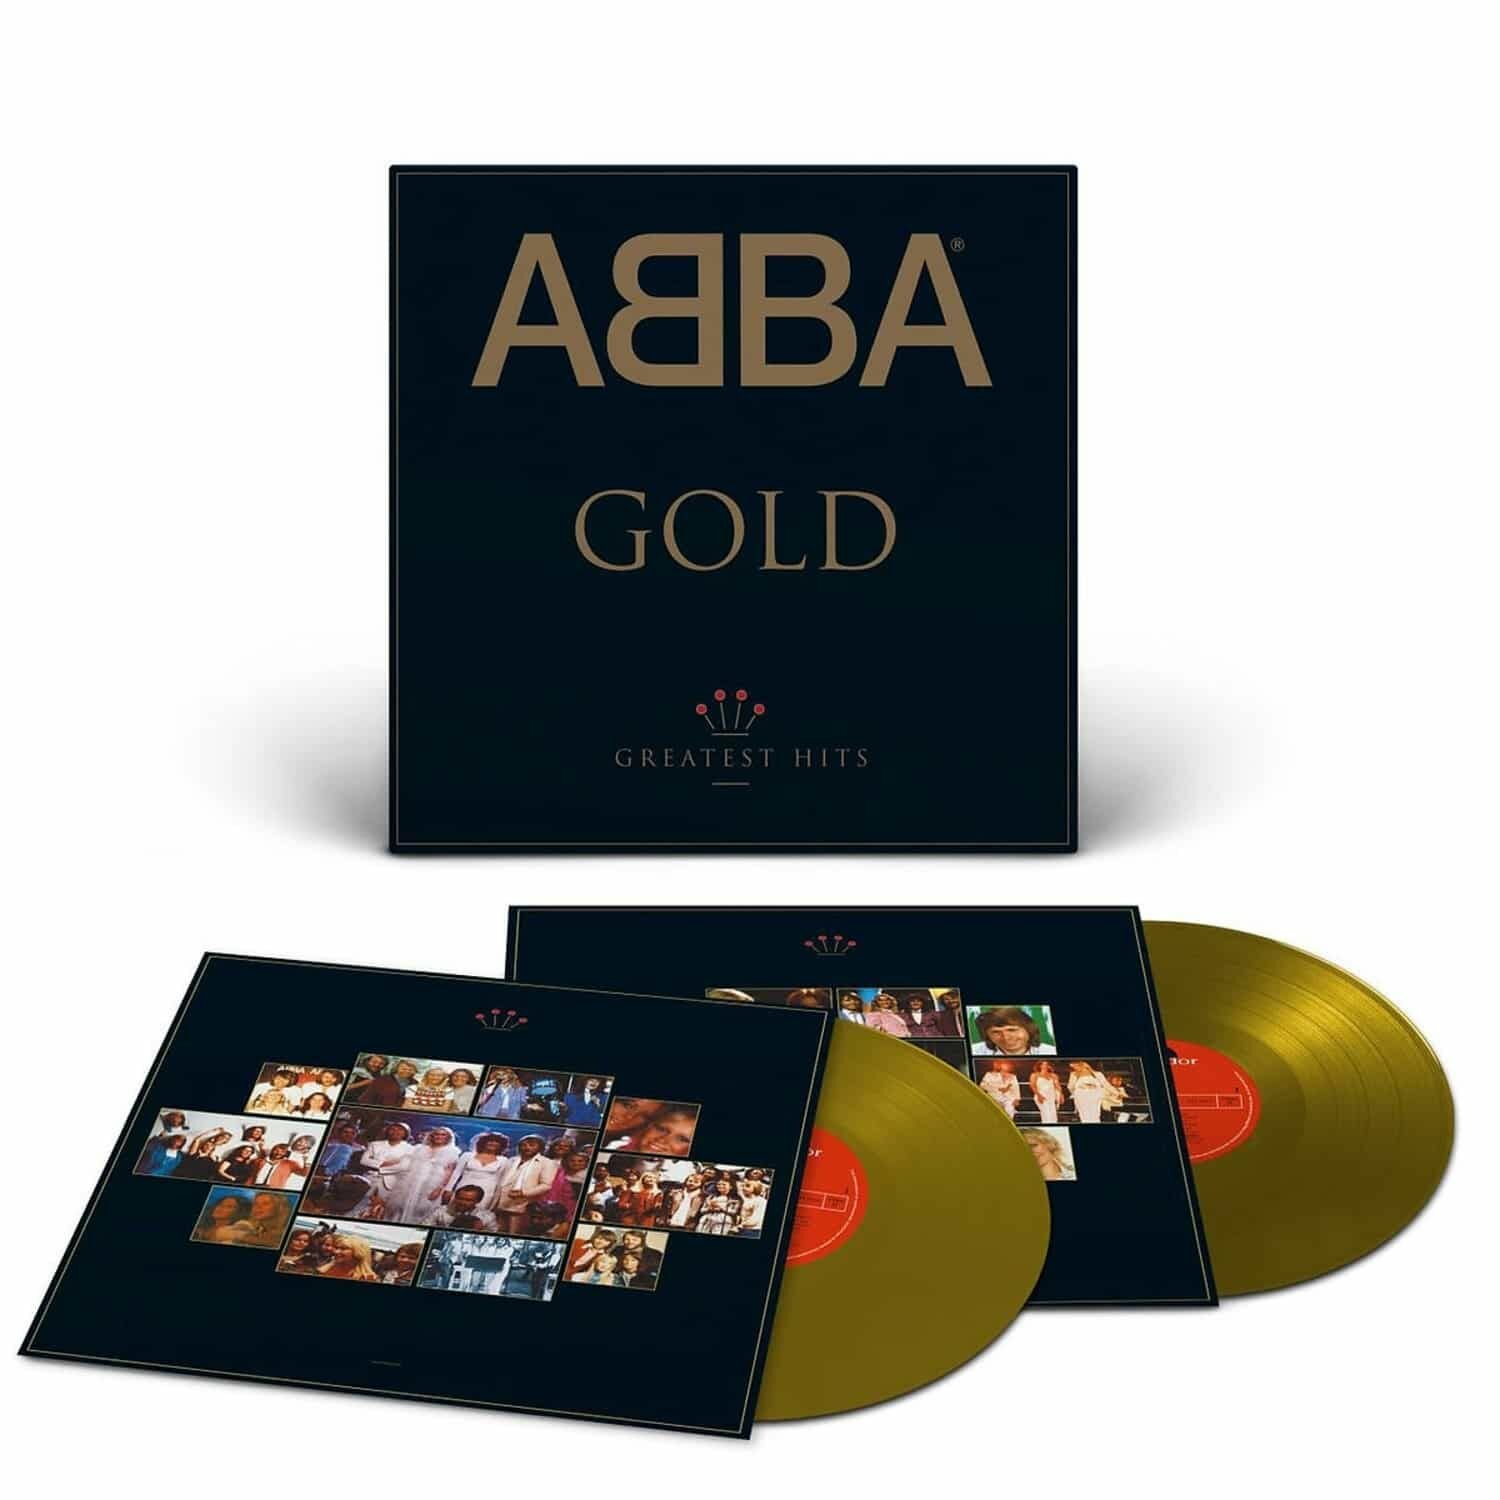 Виниловая пластинка ABBA - Gold (Greatest Hits) 2LP (LTD GOLDEN)